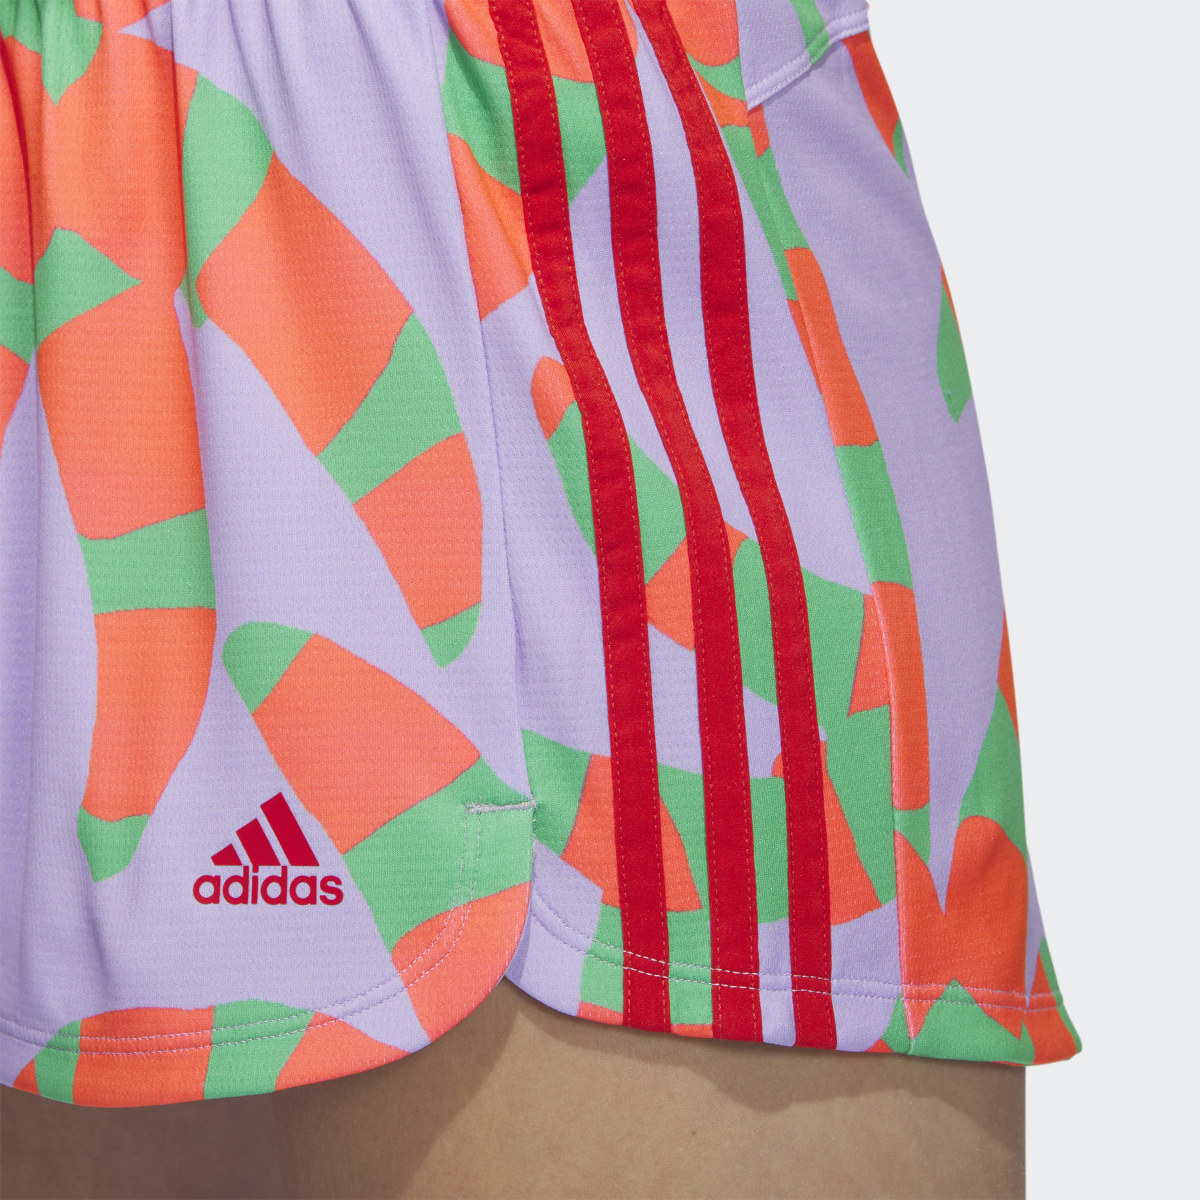 Adidas x FARM Rio Pacer 3-Stripes Knit Shorts. 6